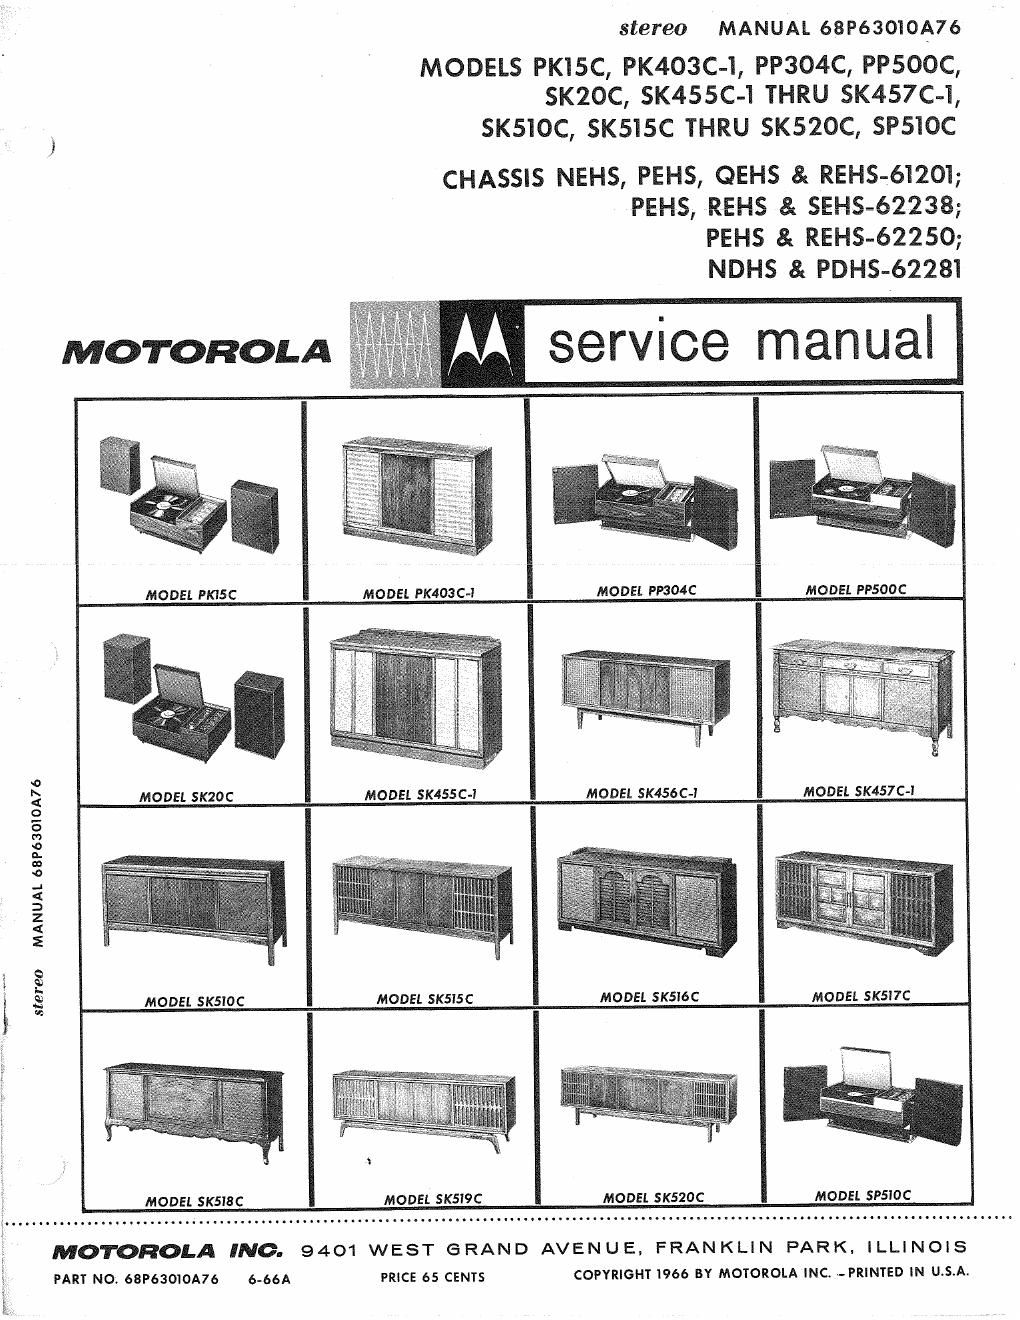 motorola sk 518 c service manual